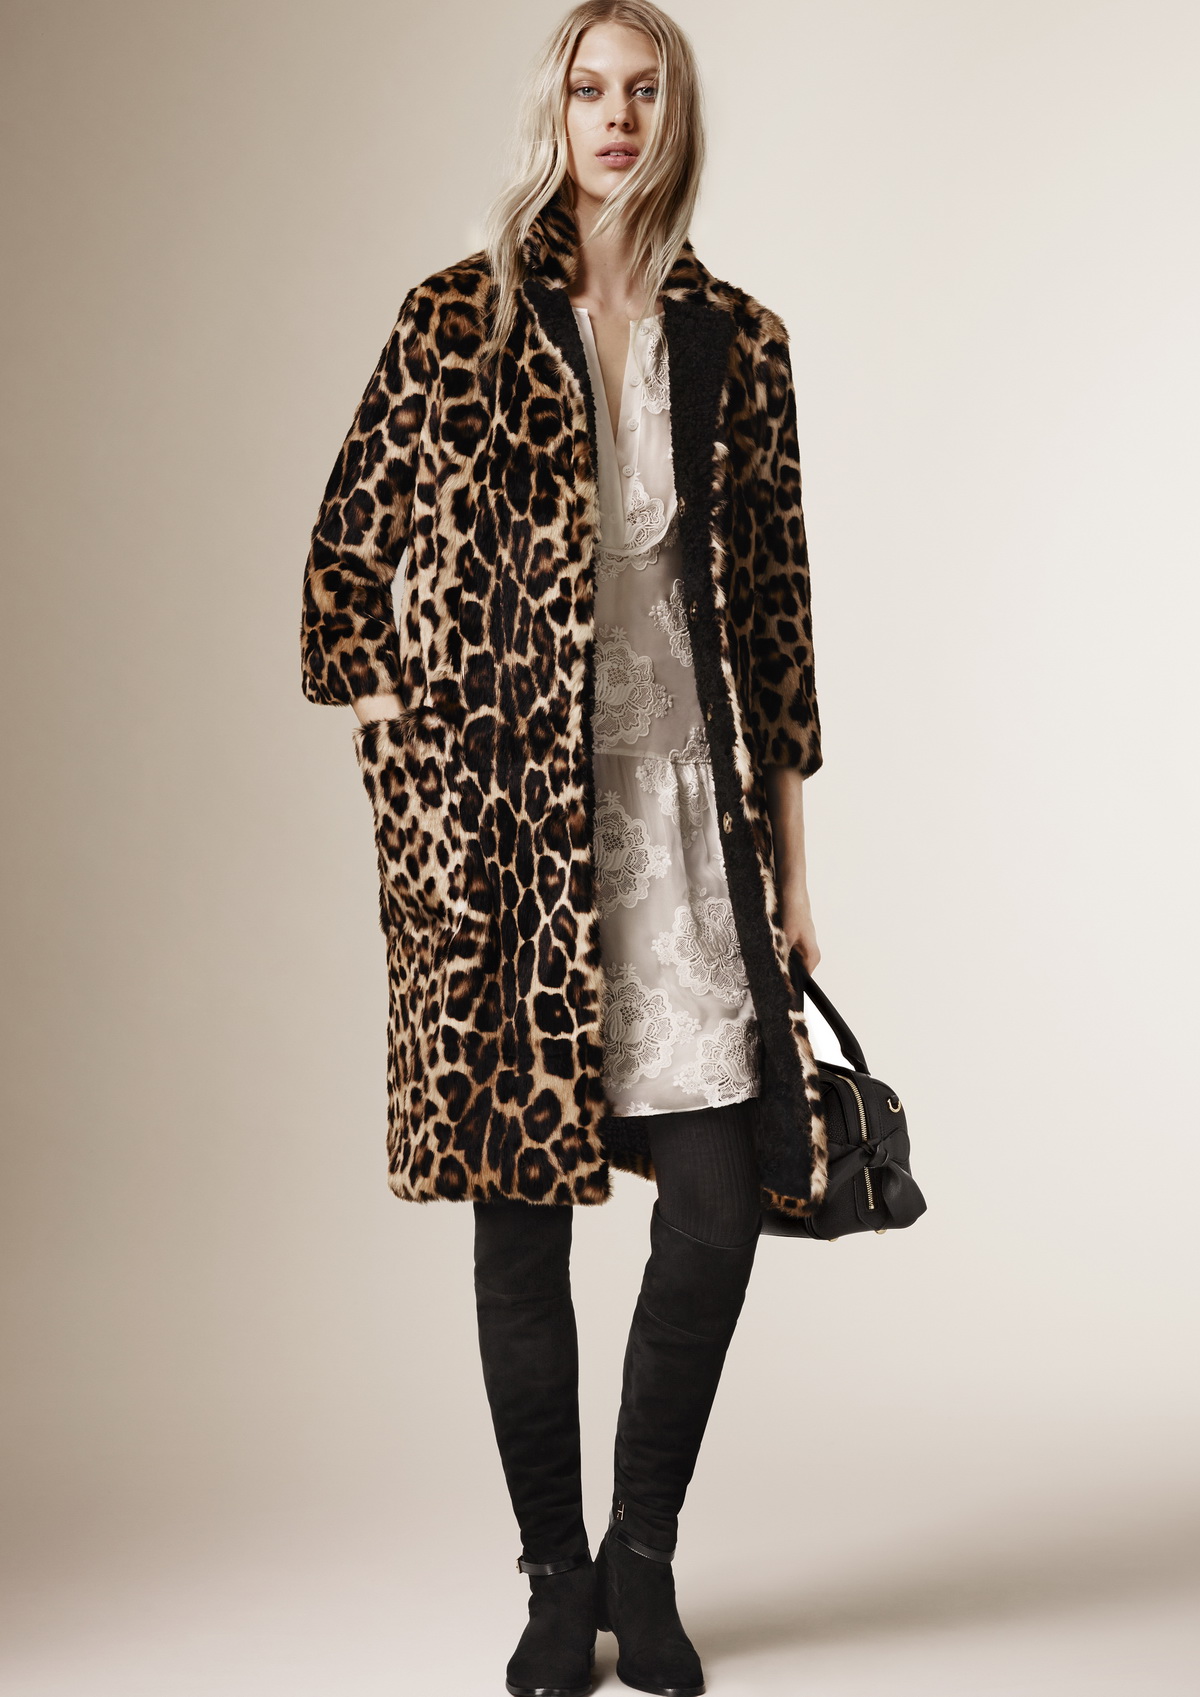 Burberry Prorsum Womenswear Autumn_Winter 2015 Pre-Collection 09